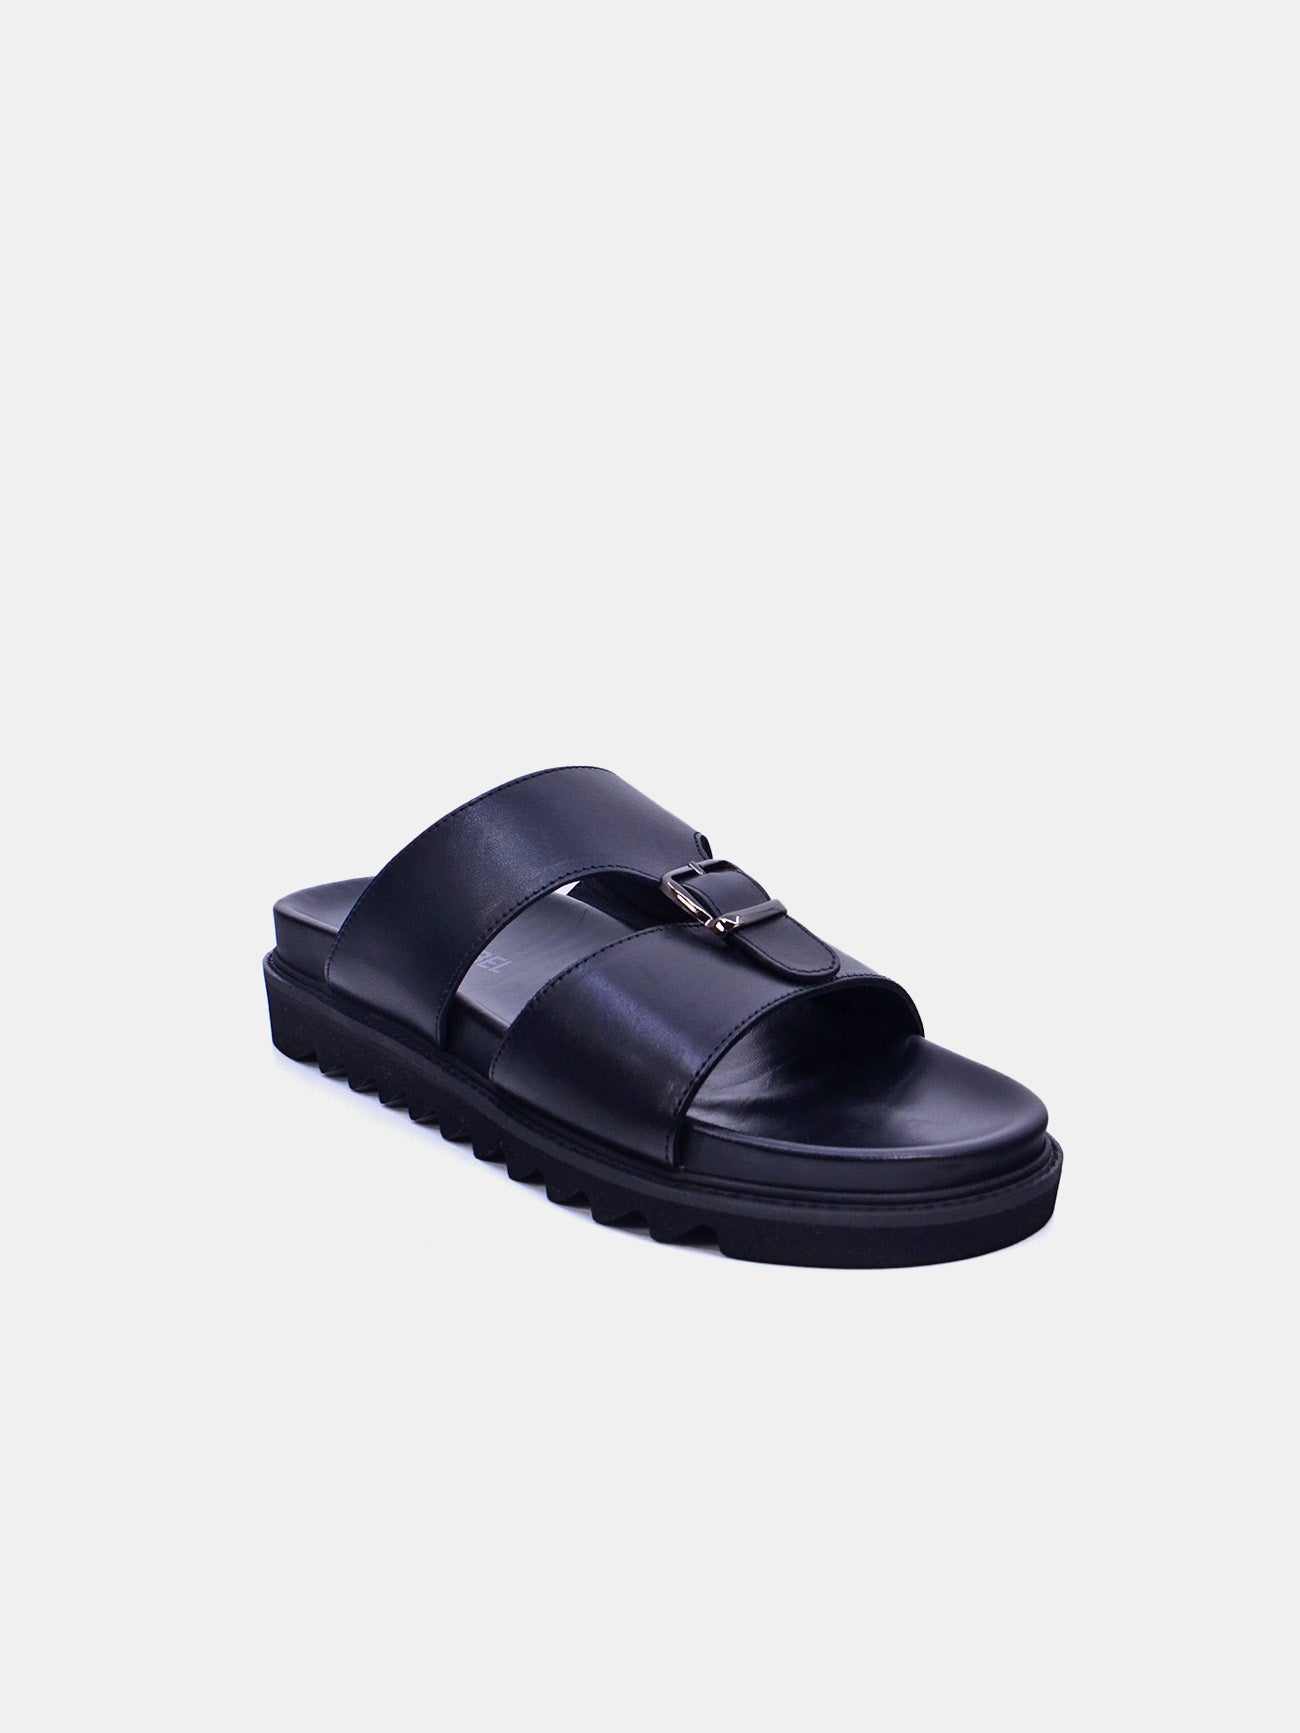 Josef Seibel 58403 Men's Casual Sandals #color_Black